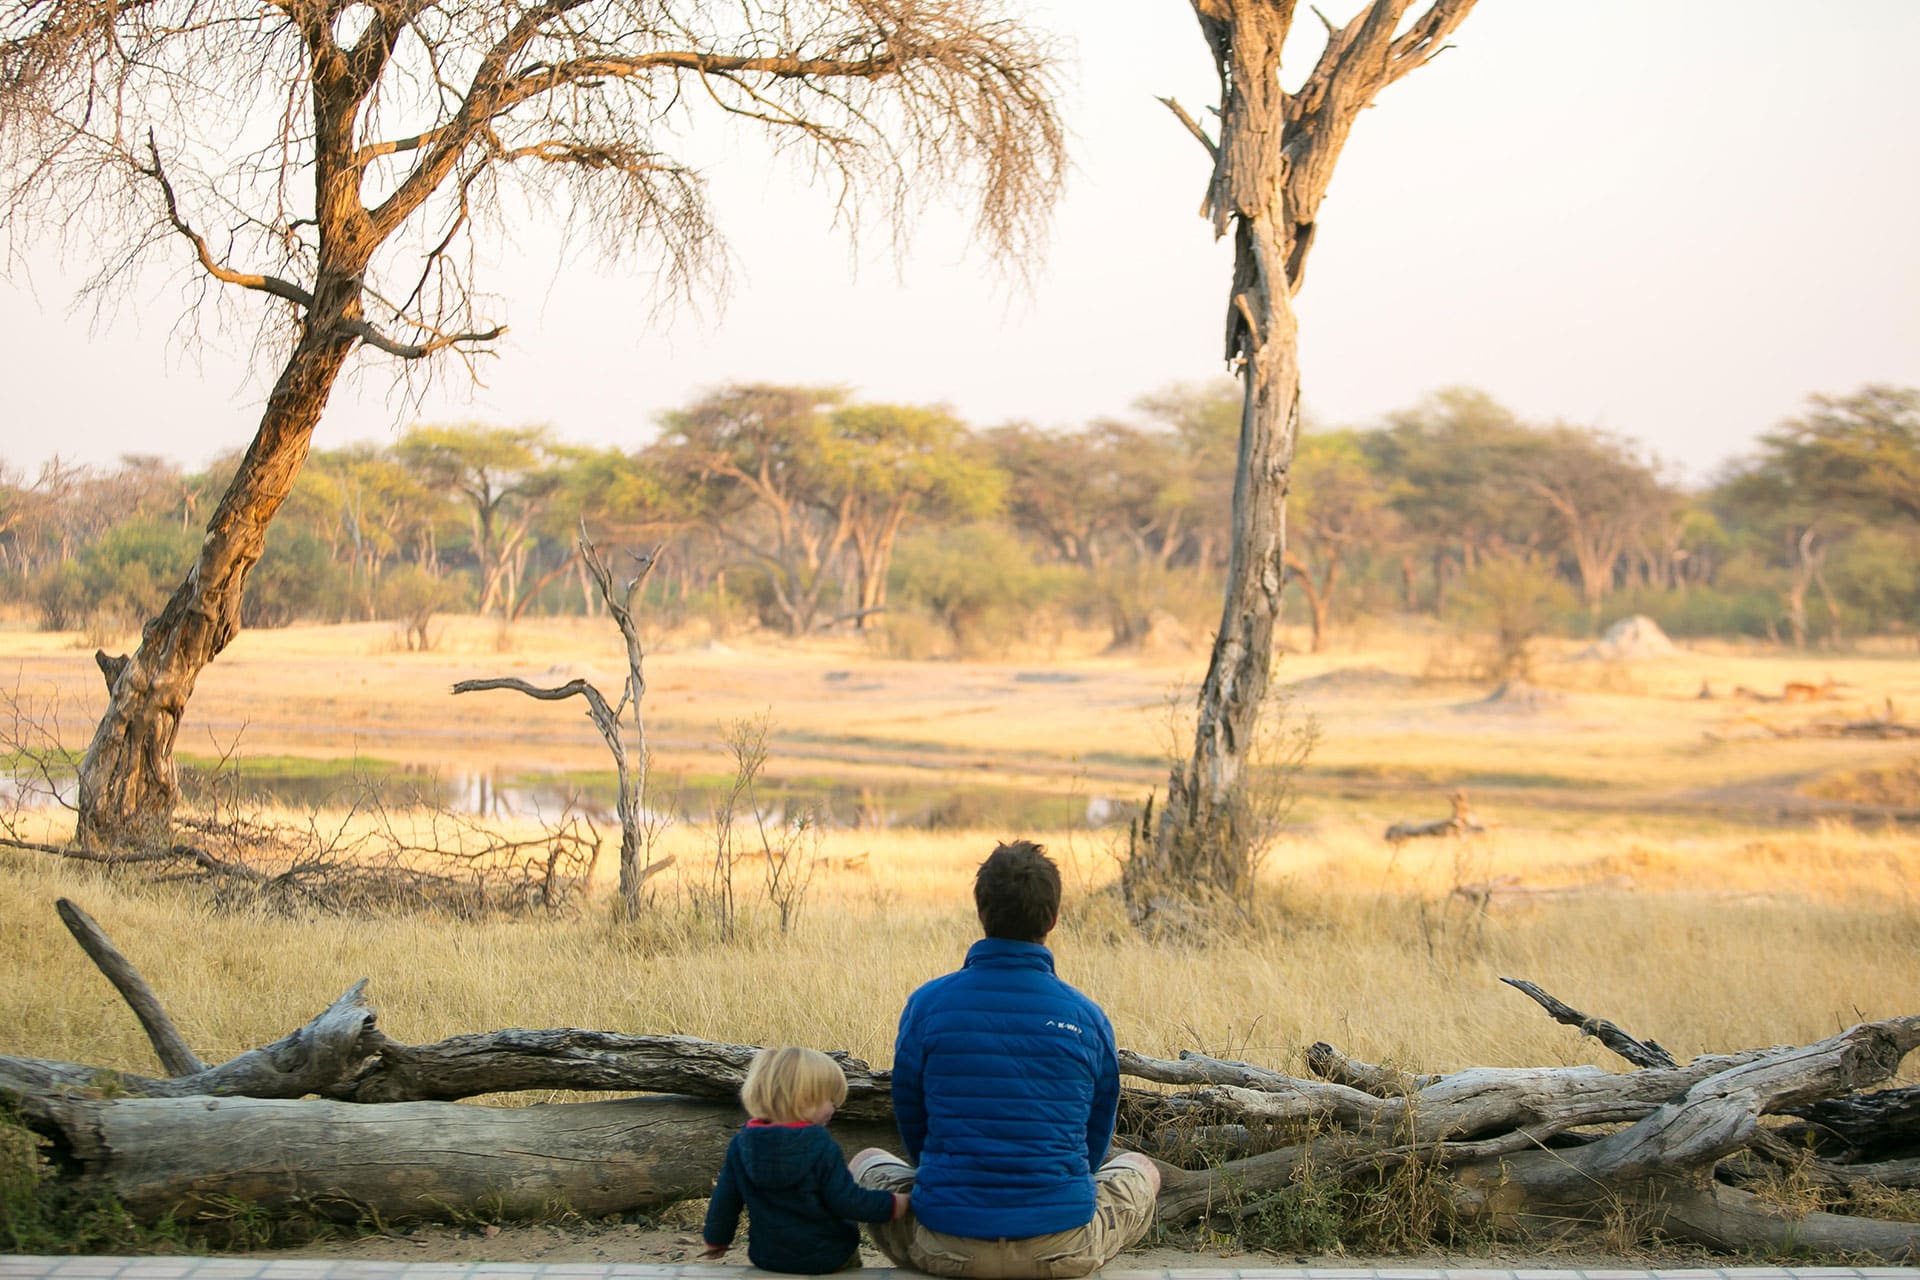 Tom's Little Hide, Zimbabwe which allows children under 10 free for an African safari with children